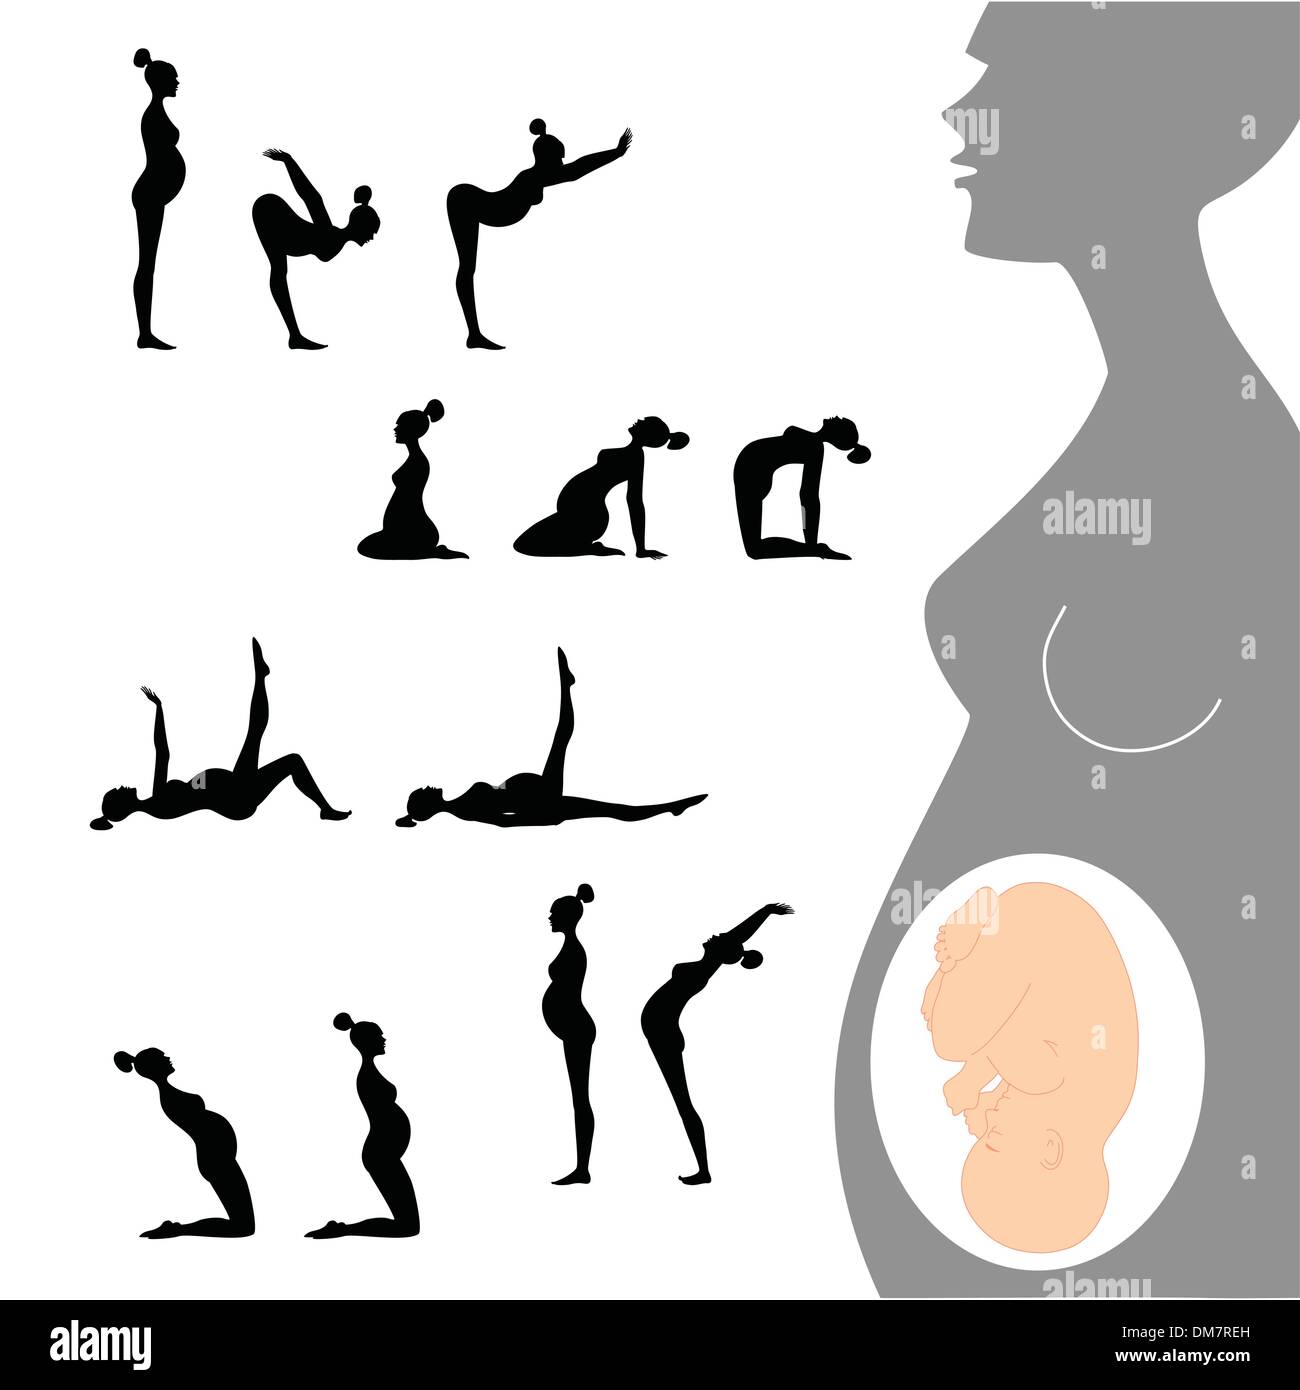 gymnastics-for-pregnant-women Stock Vector